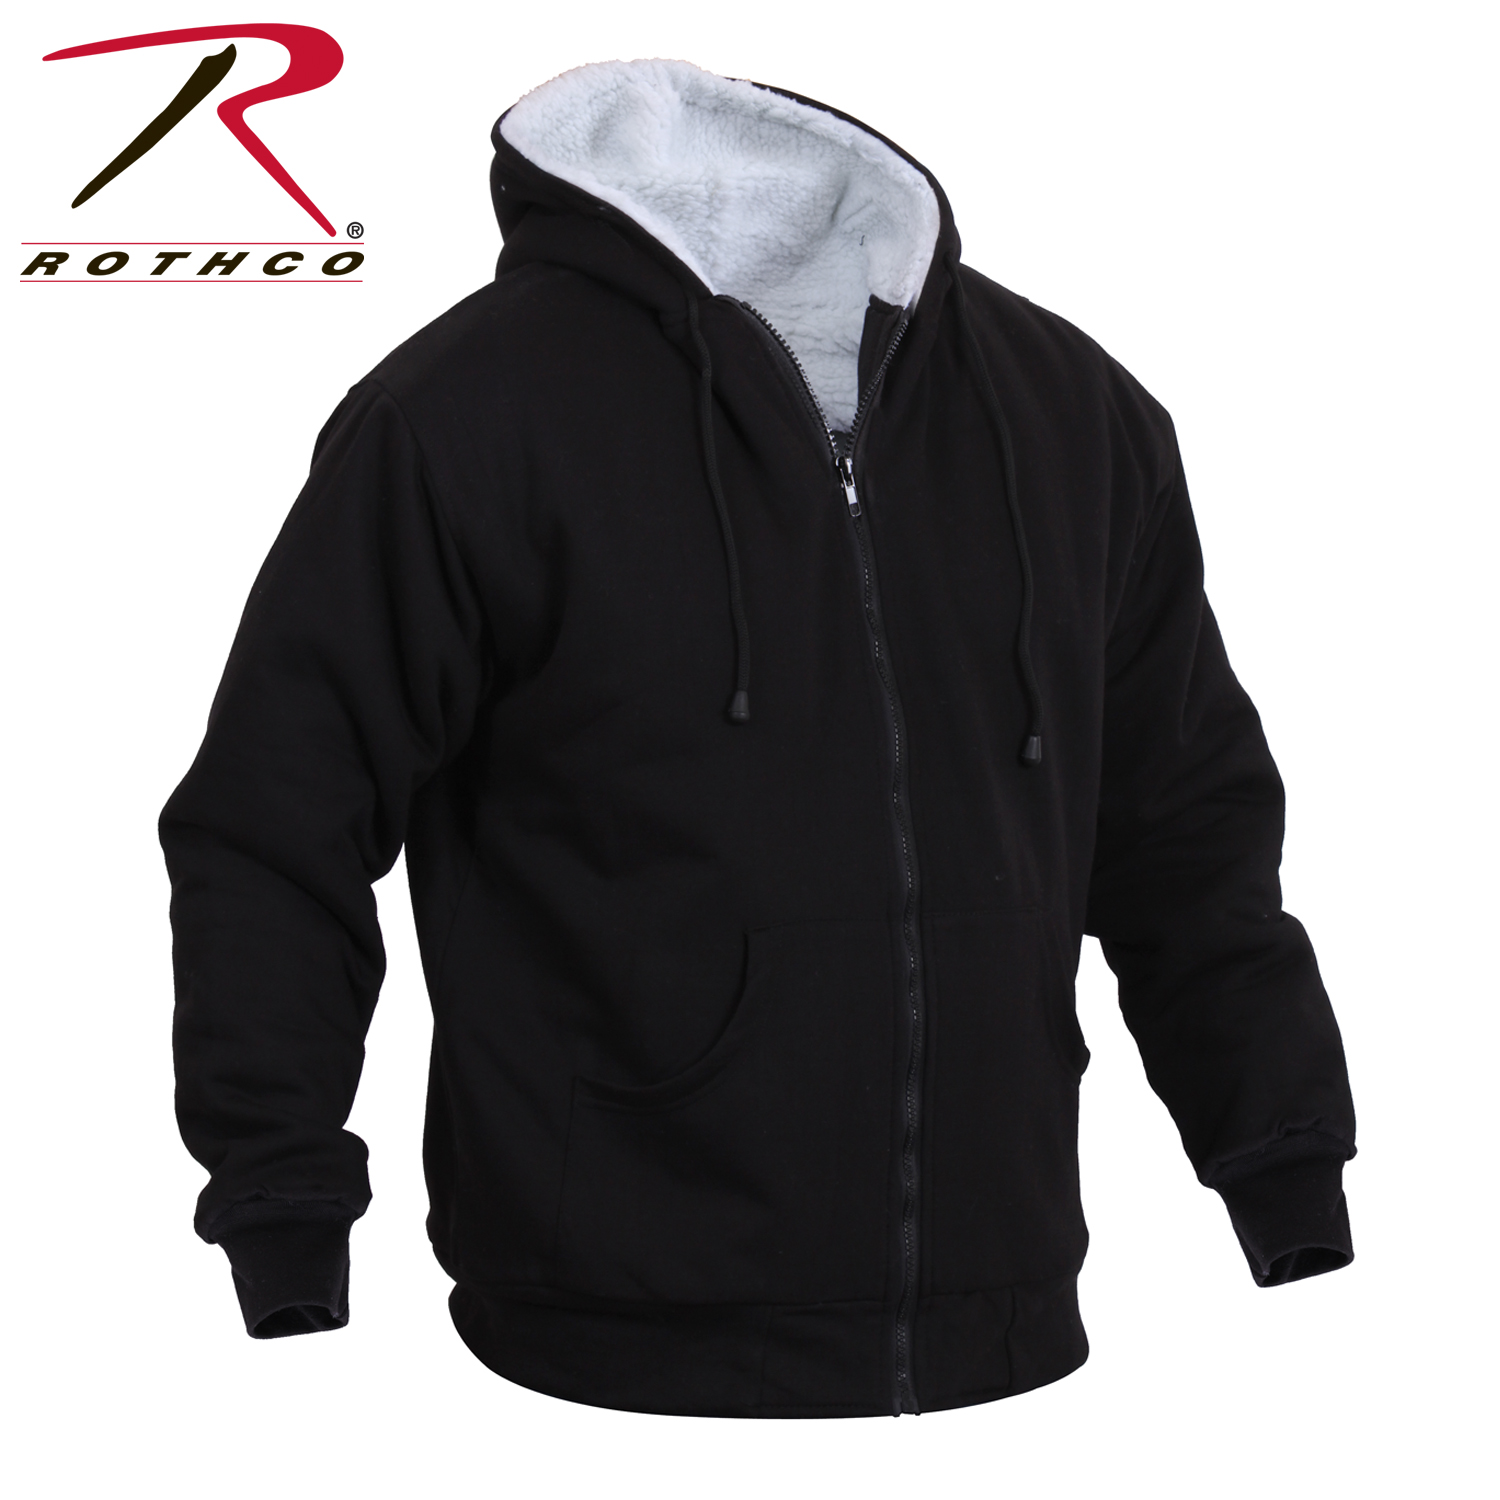 Rothco Heavyweight Sherpa Lined Zippered Sweatshirt